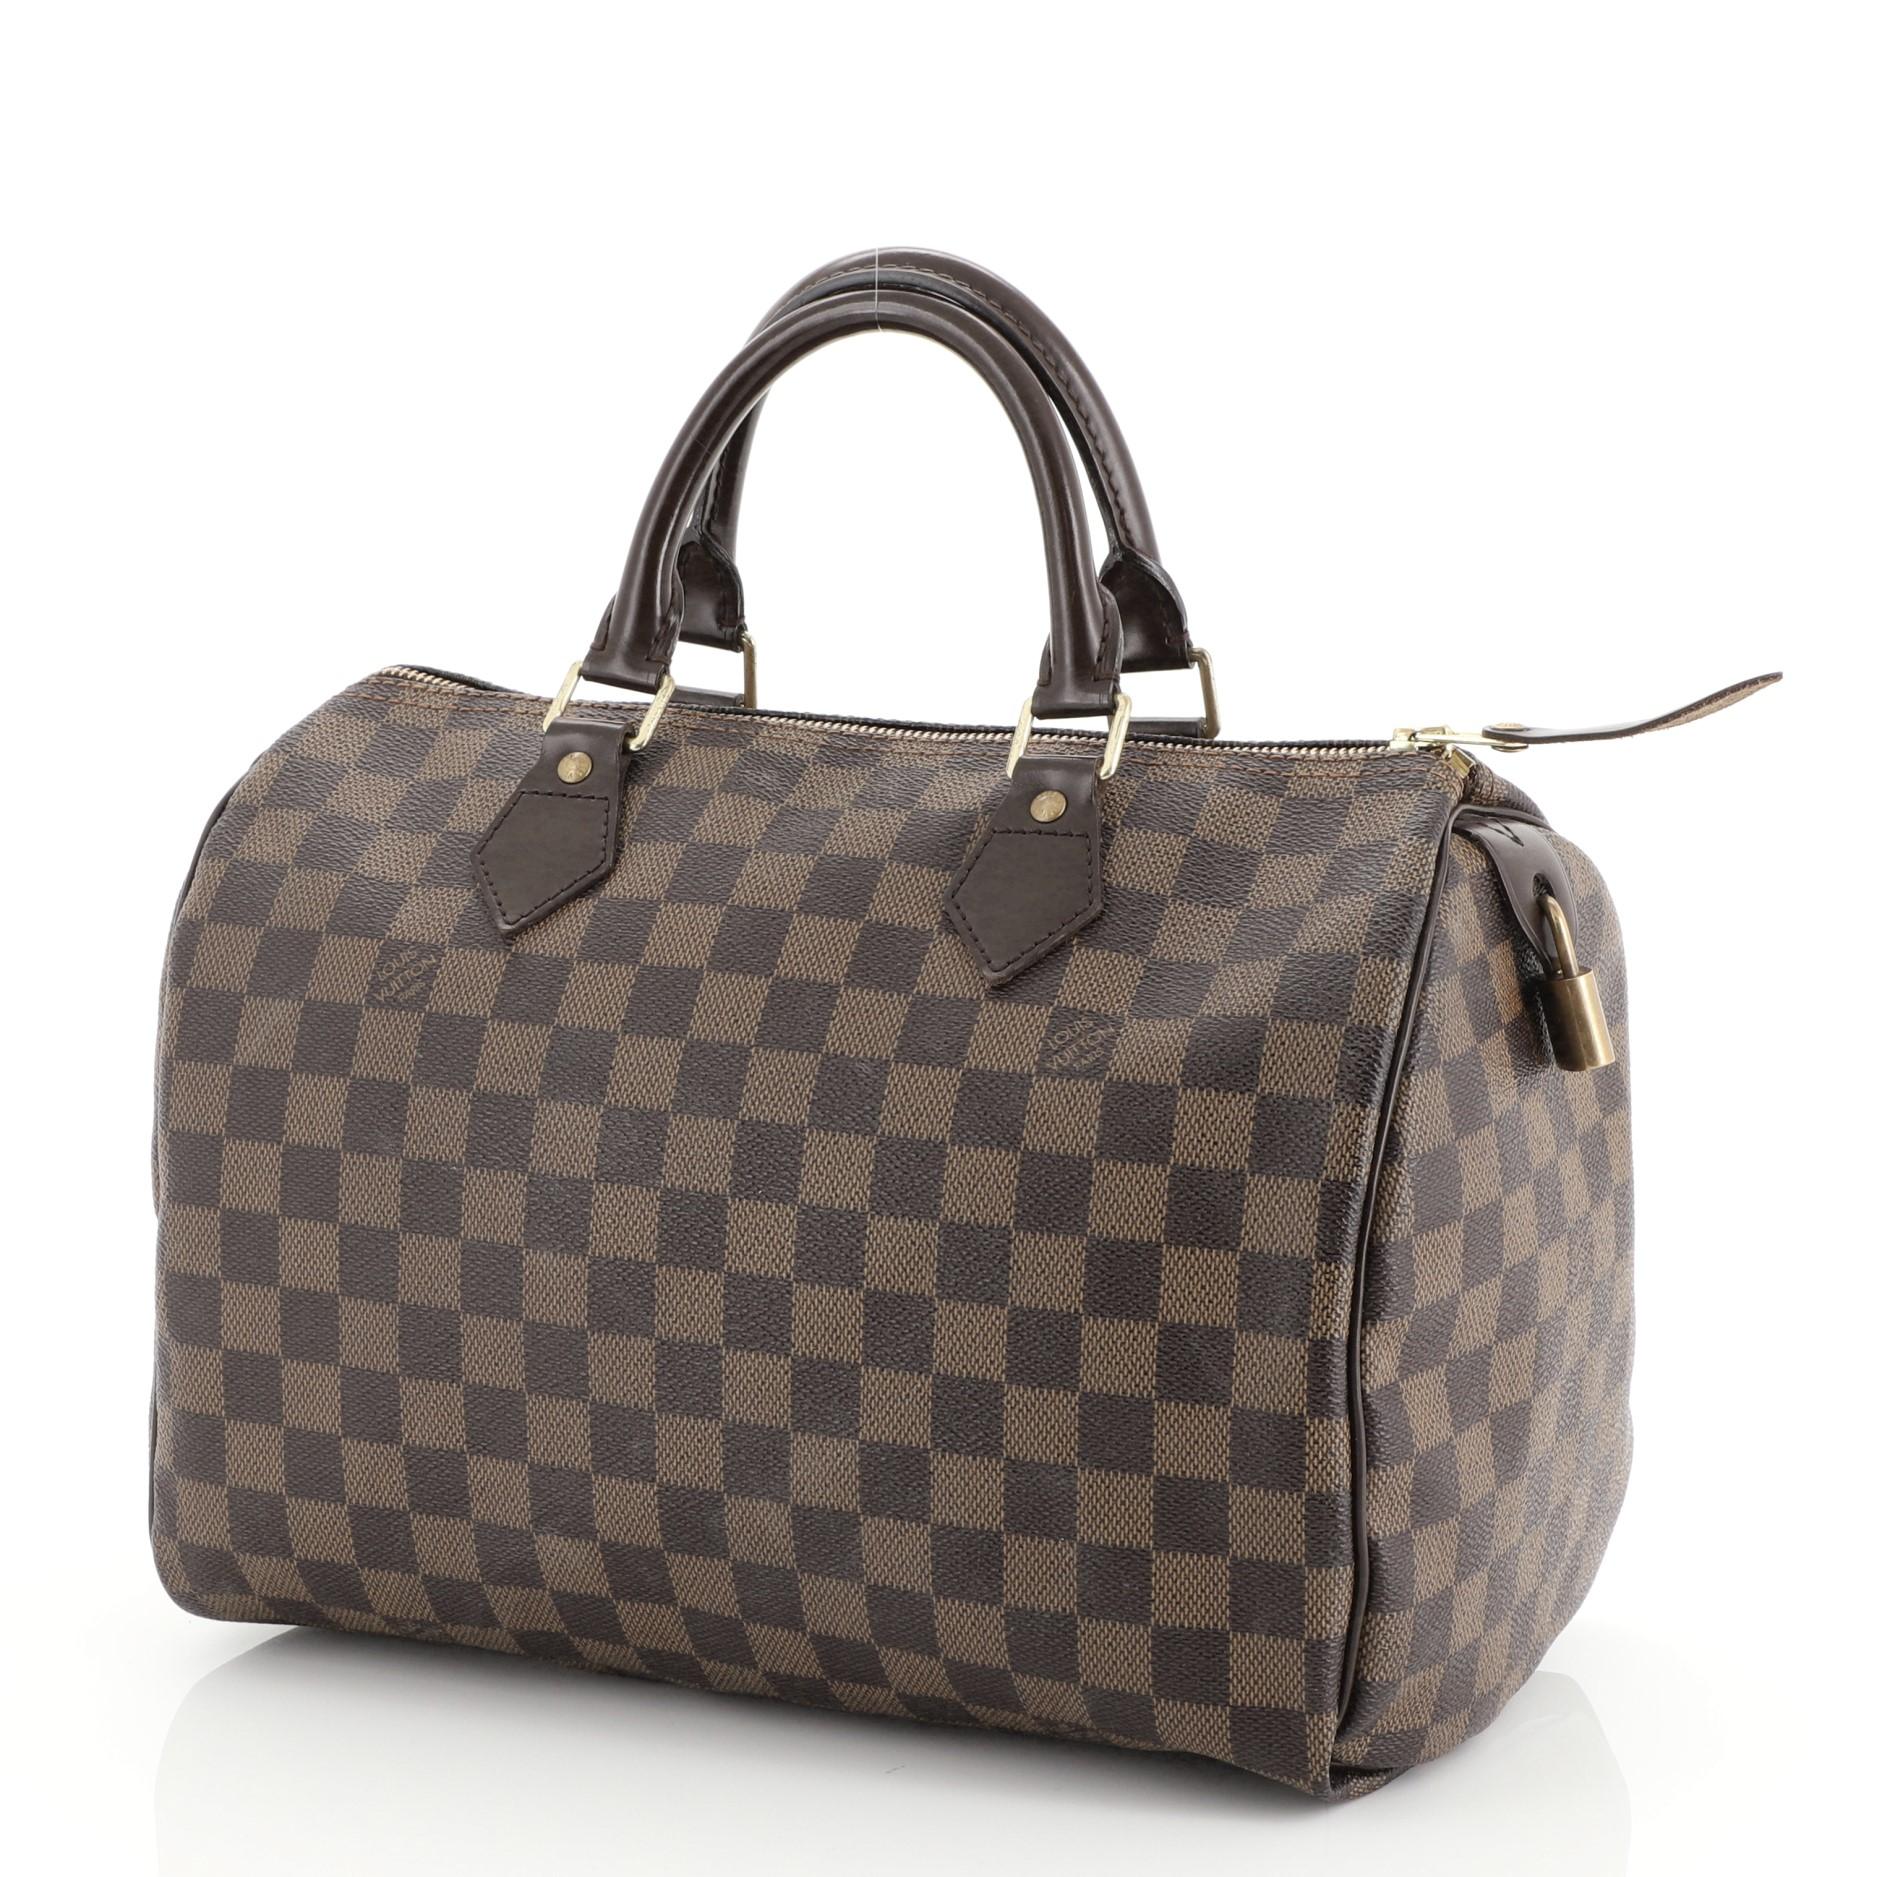 Black Louis Vuitton Speedy Handbag Damier 30 